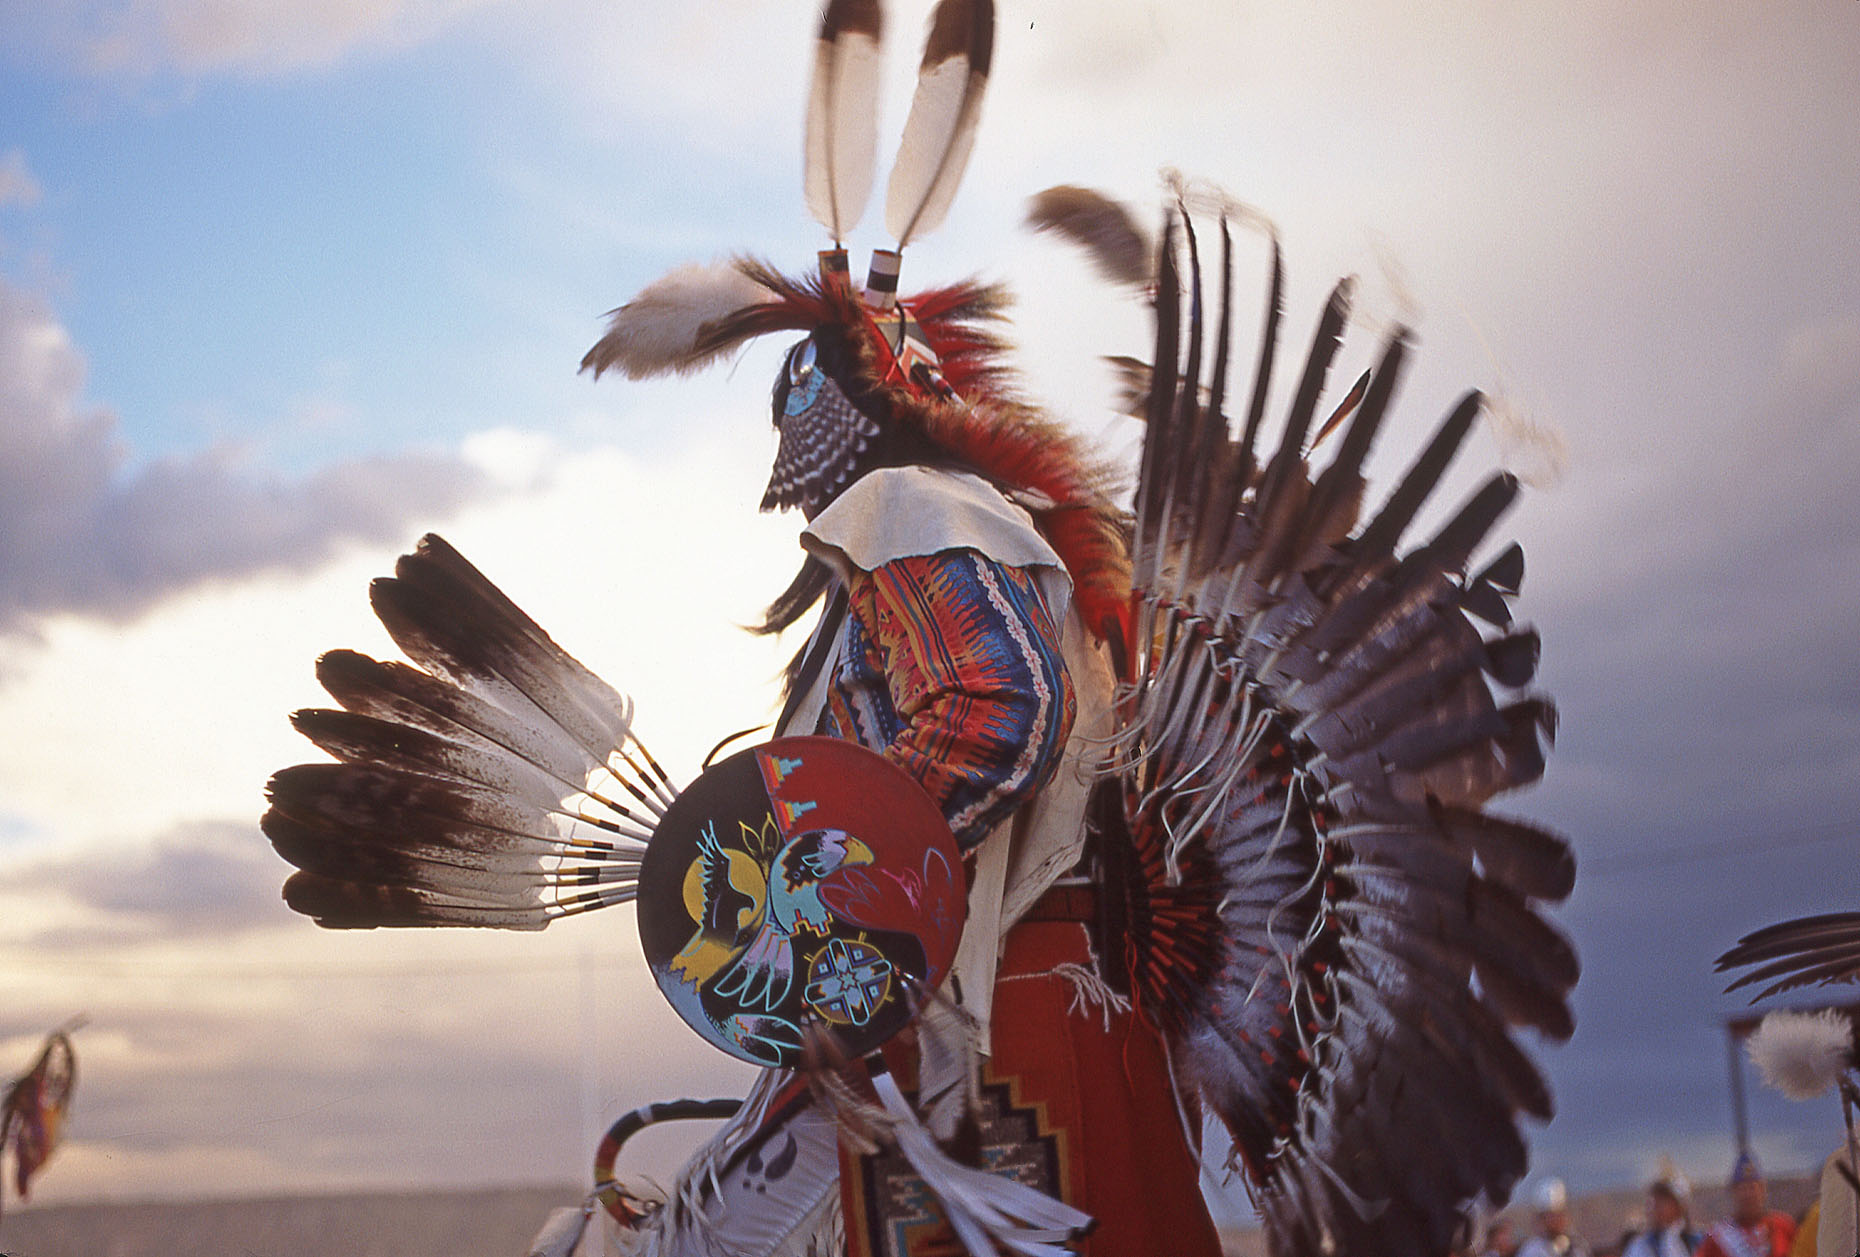 Pow Wow Traditional dancer, John Annerino, Native American dance